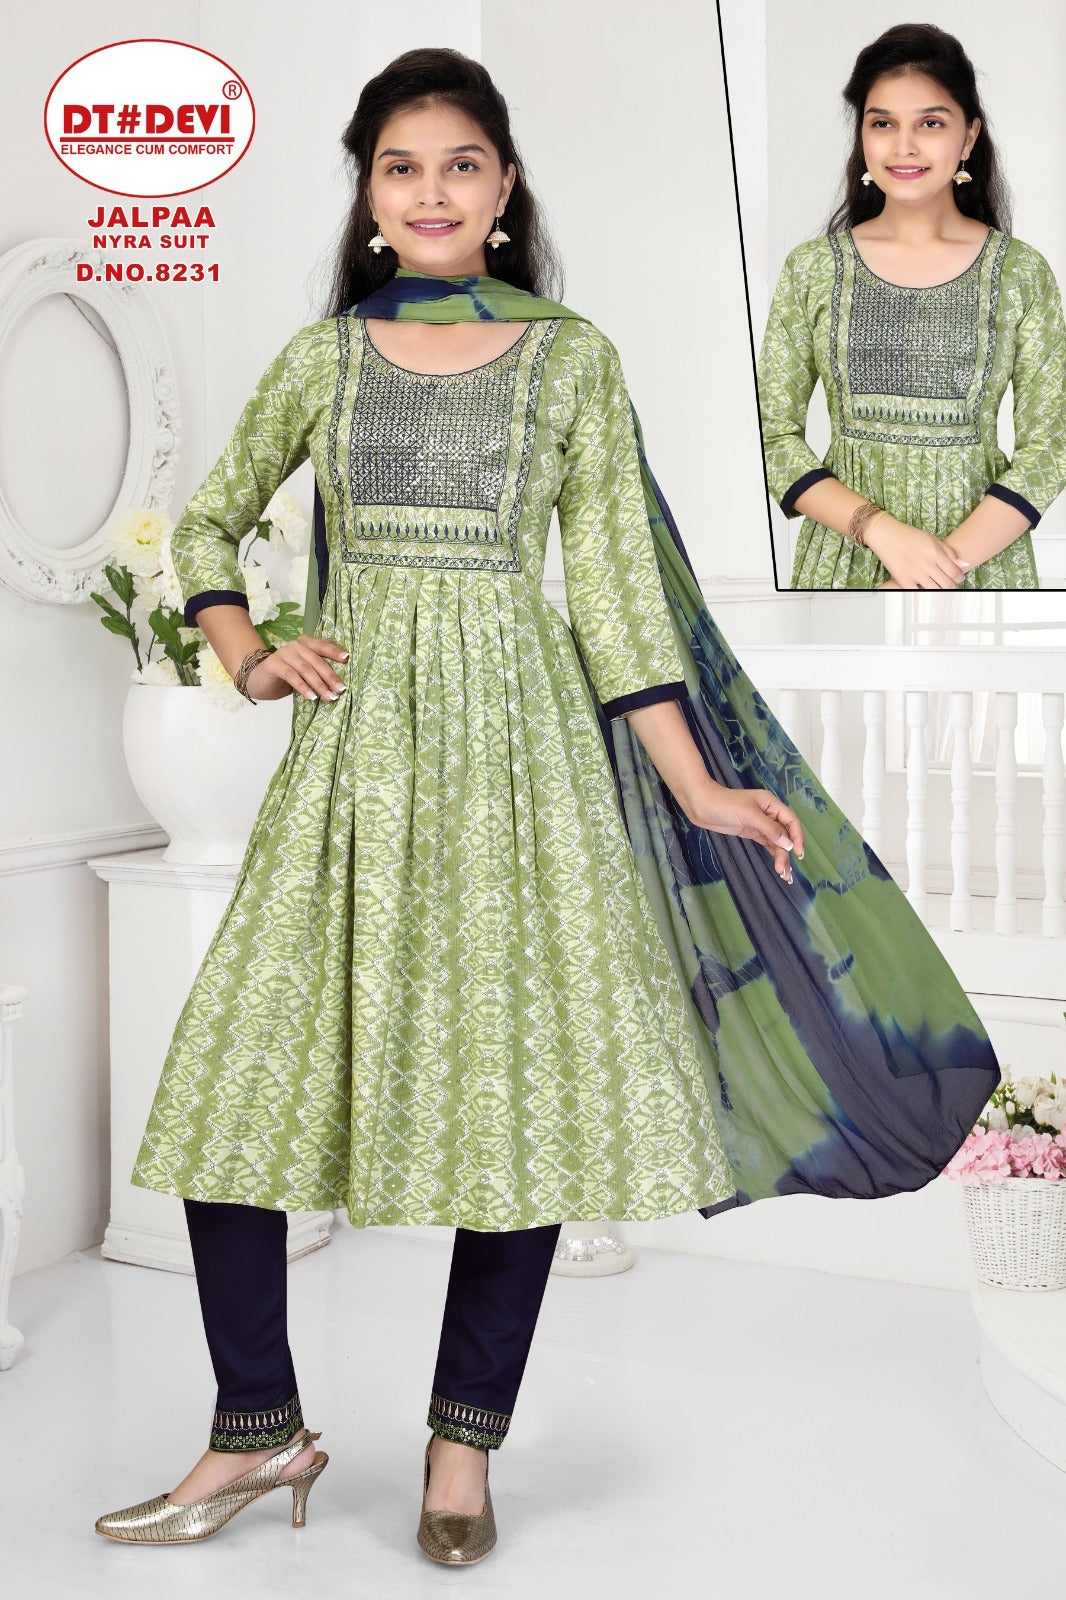 8231-Jalpa Dt Devi Rayon Readymade Pant Style Suits